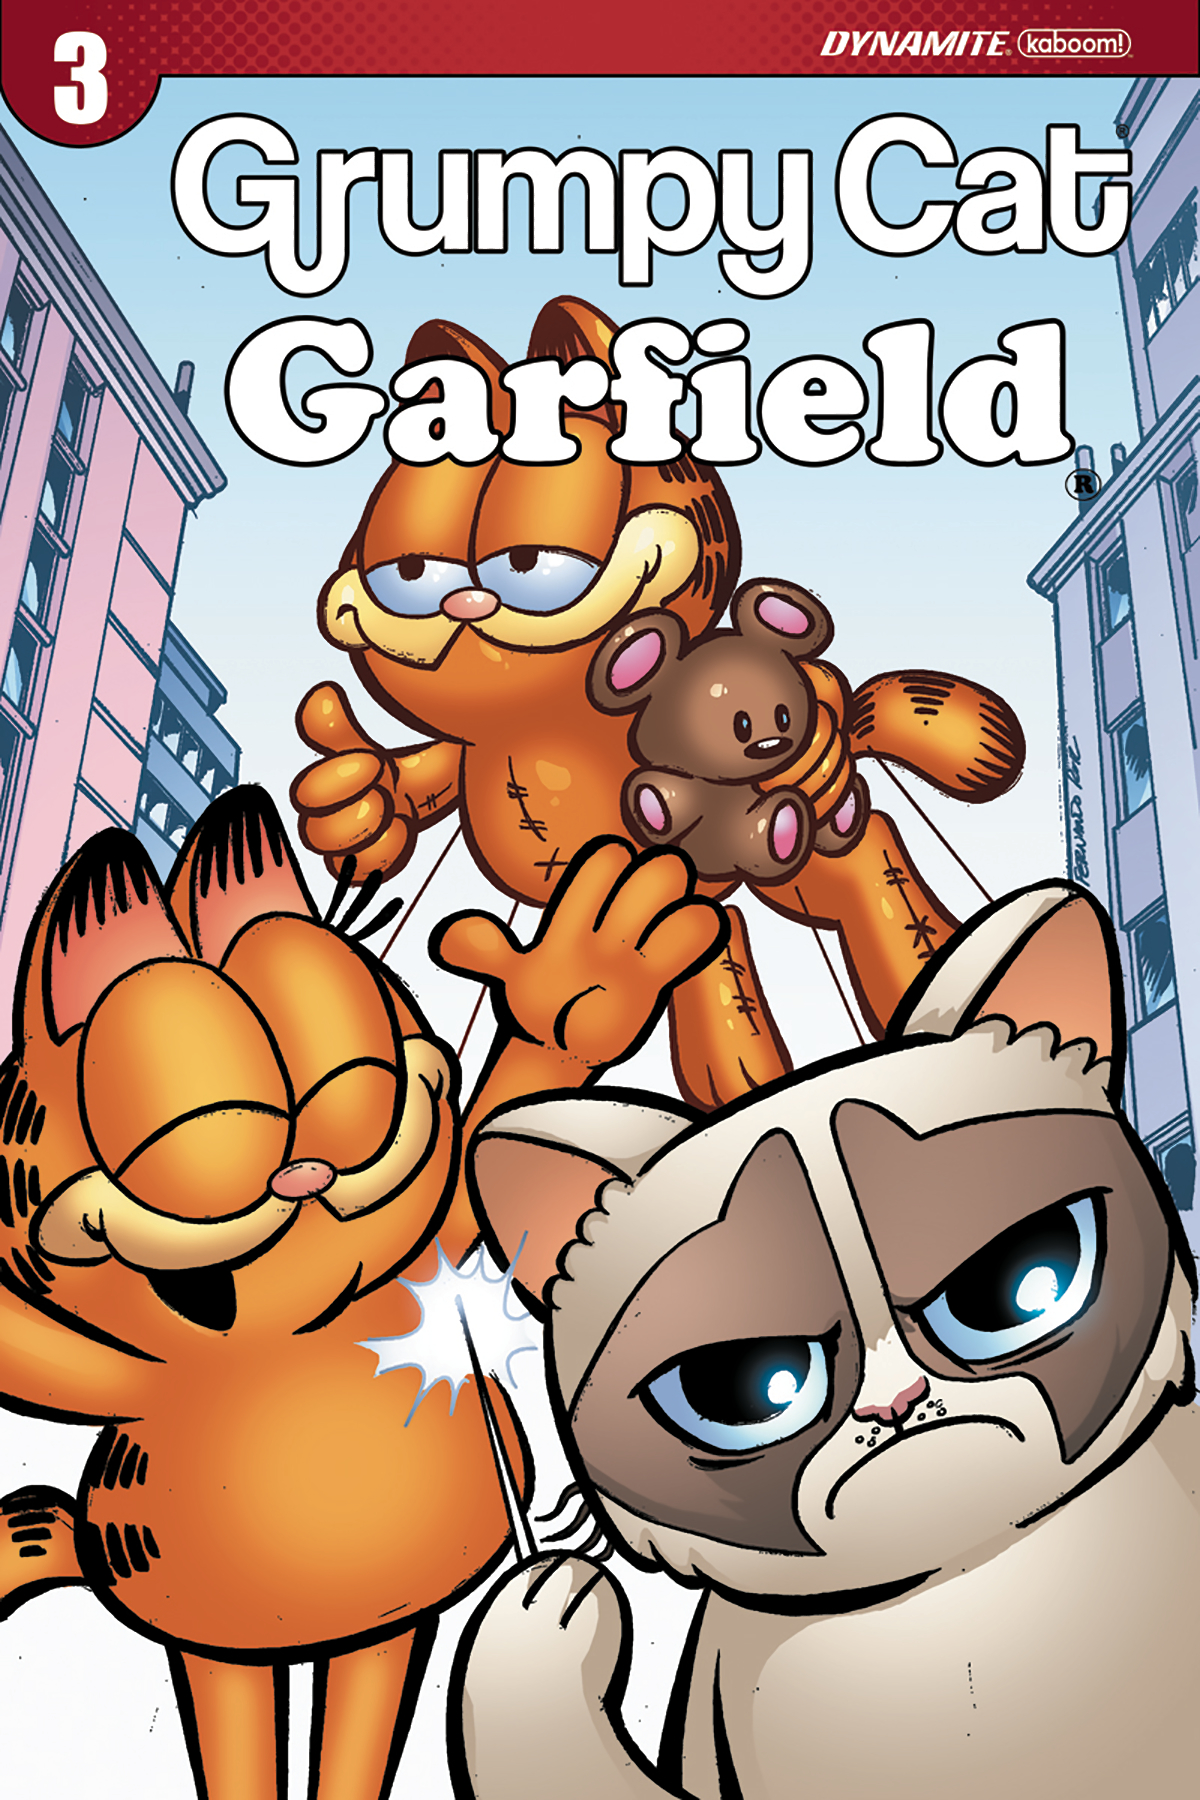 GRUMPY CAT GARFIELD #3 (OF 3) CVR C RUIZ